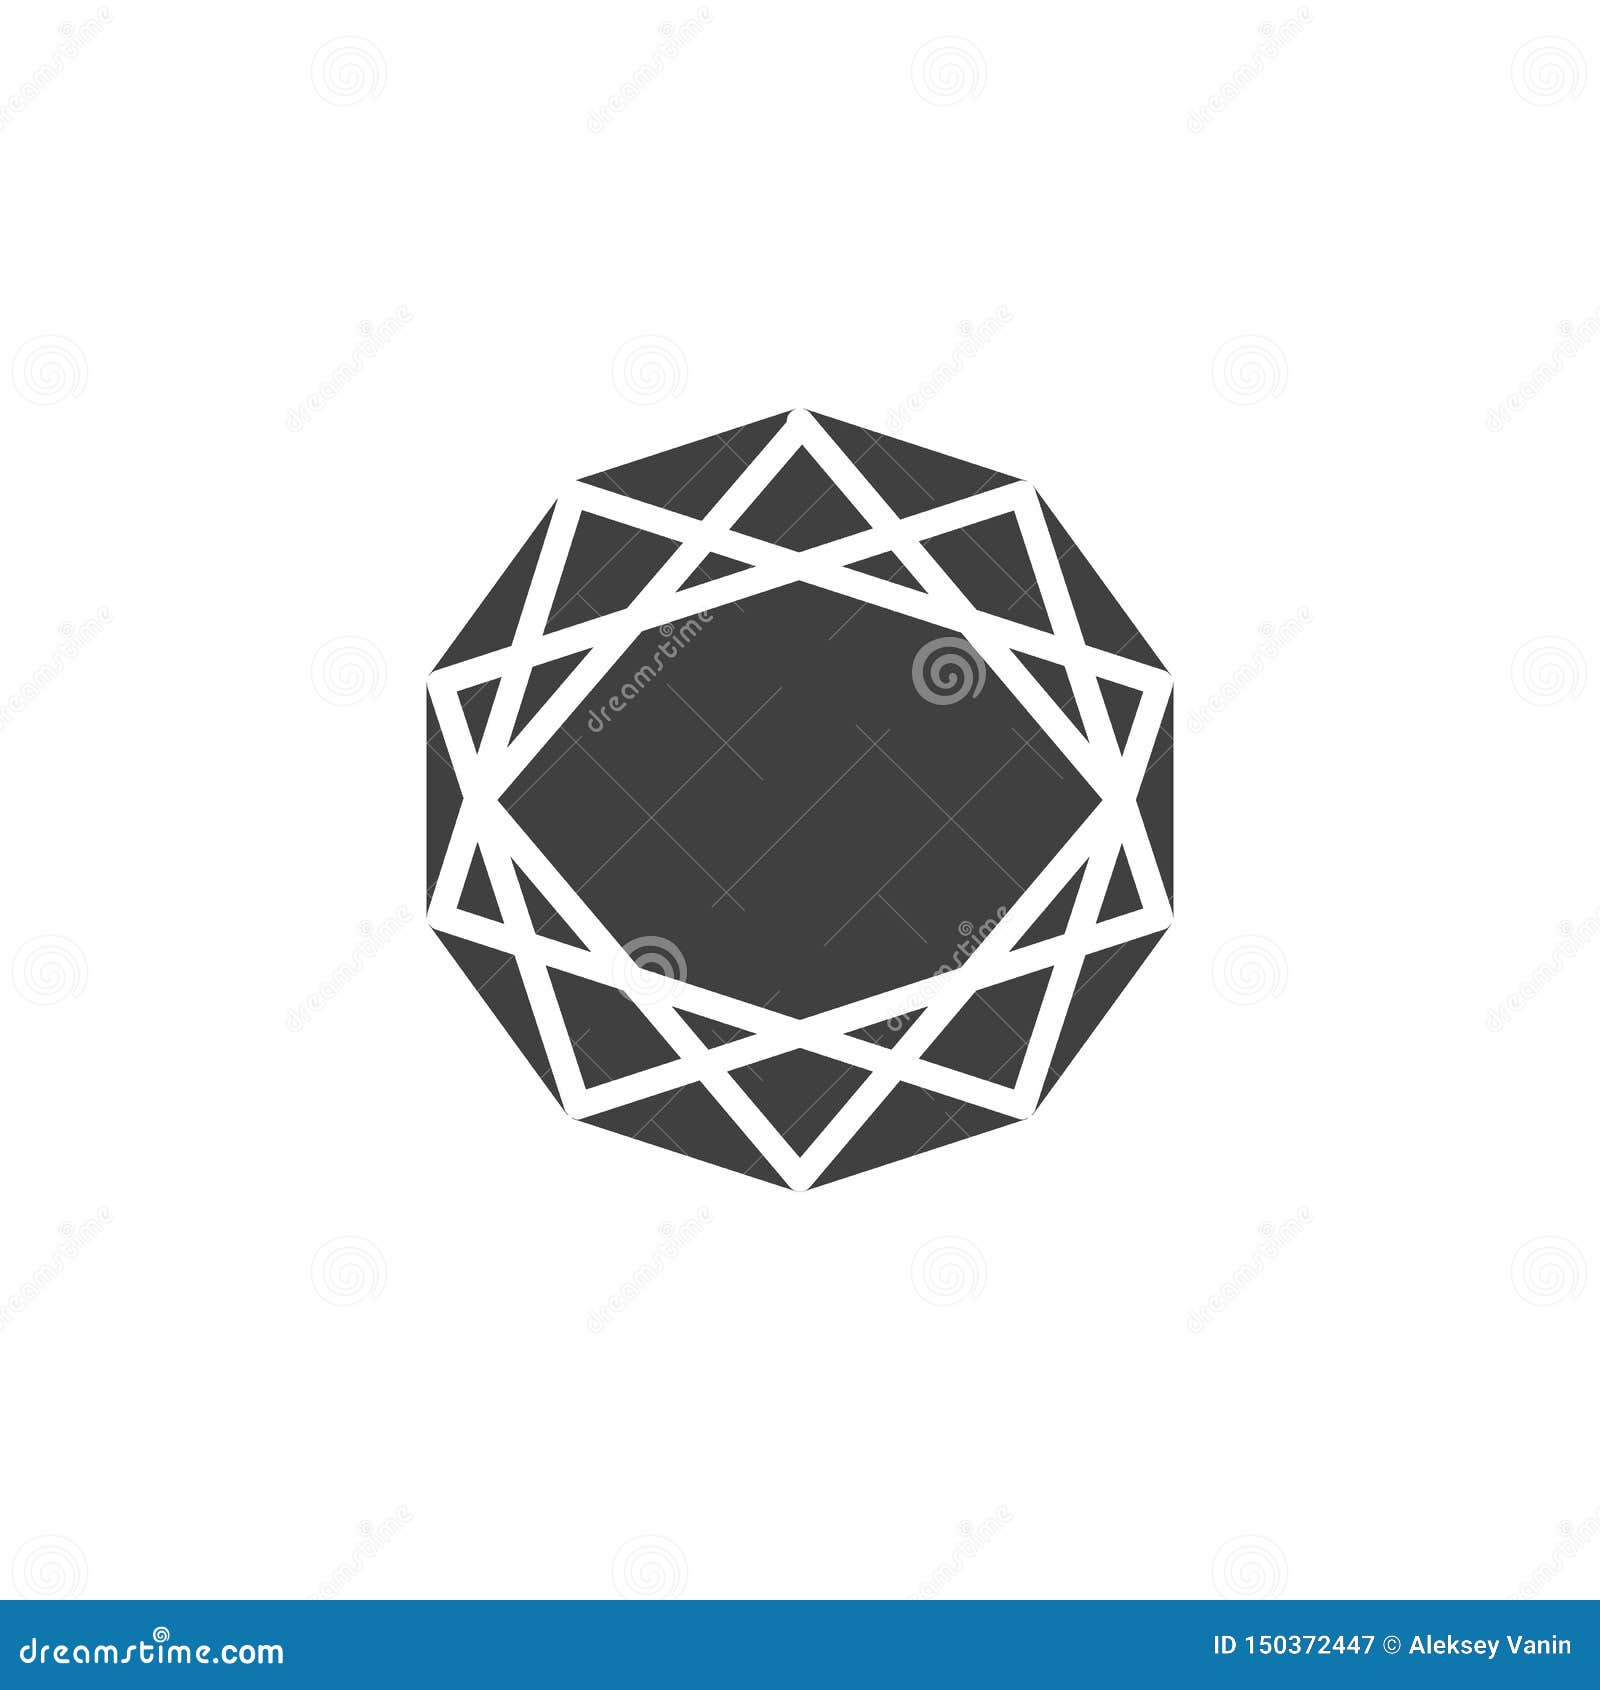 Diamond Cut Shape Vector Icon Stock - Illustration of symbol: 150372447